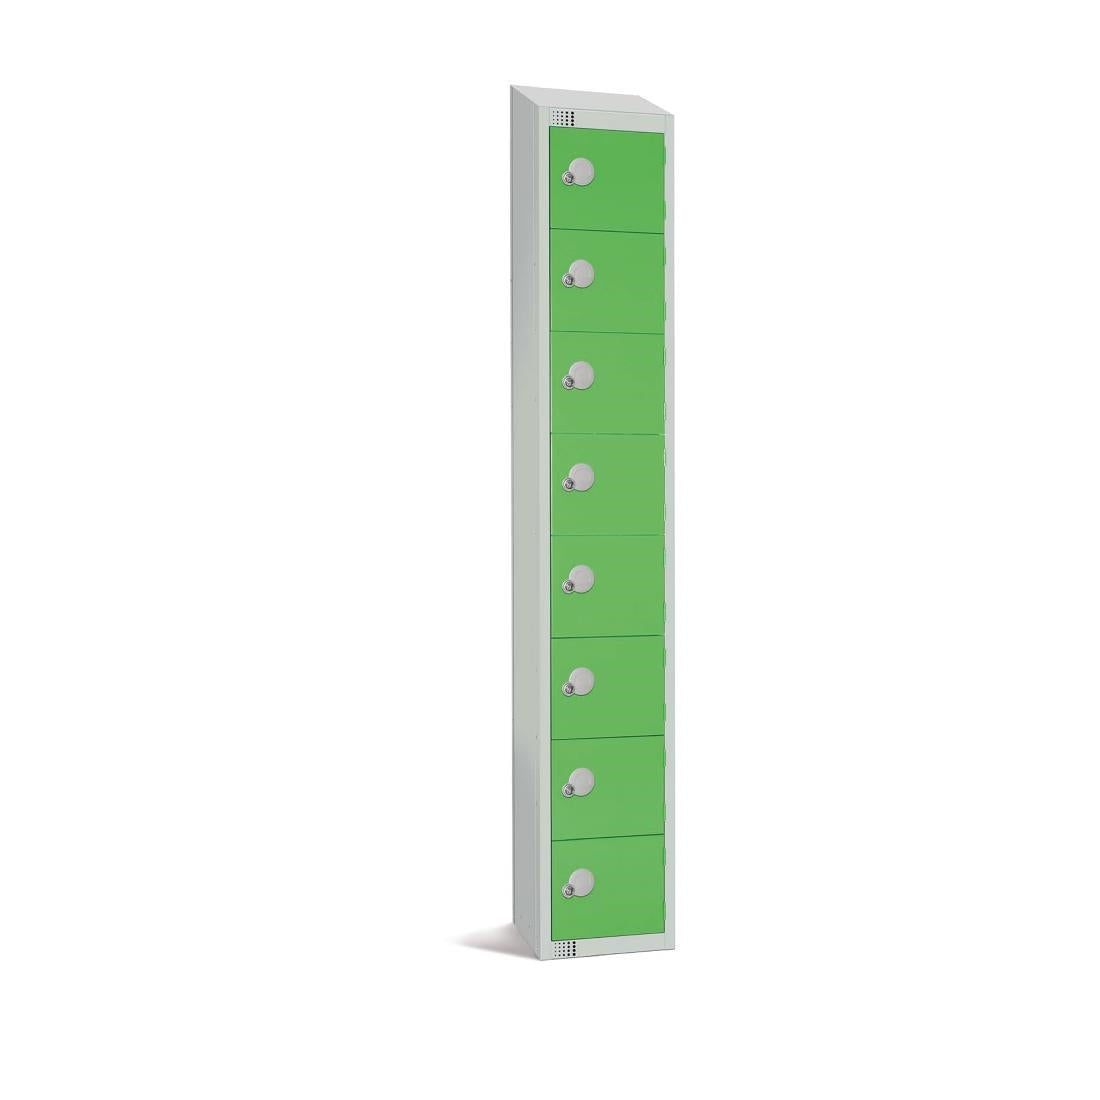 CE109-ELS Elite Eight Door Electronic Combination Locker with Sloping Top Green JD Catering Equipment Solutions Ltd